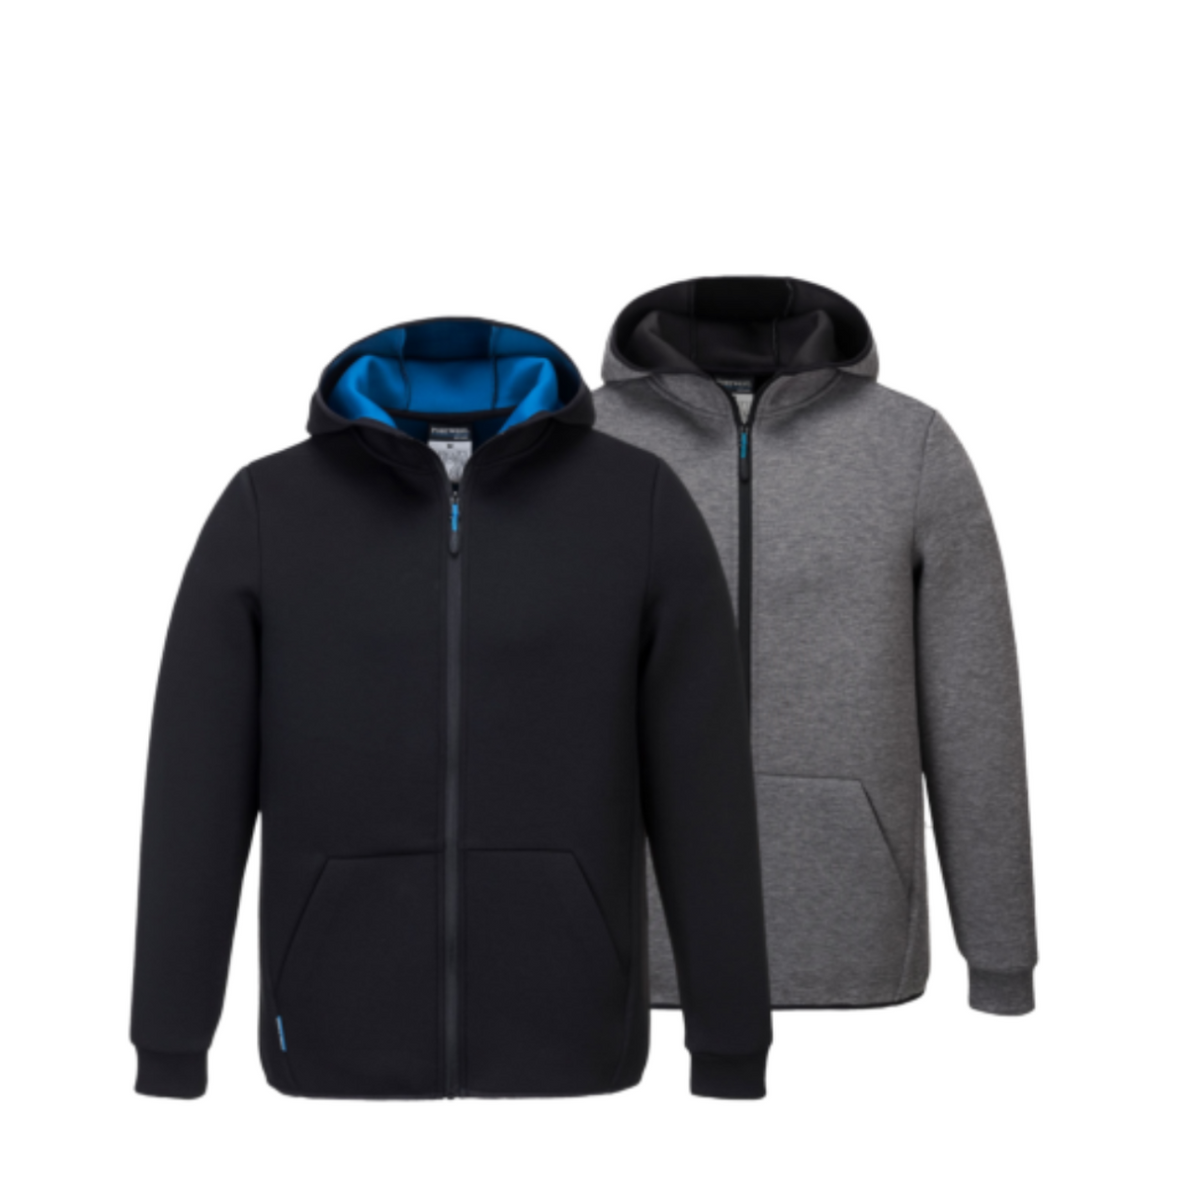 Portwest Mens KX3 Technical Fleece Work Jacket Warm Comfy Premium Fabric T831-Collins Clothing Co